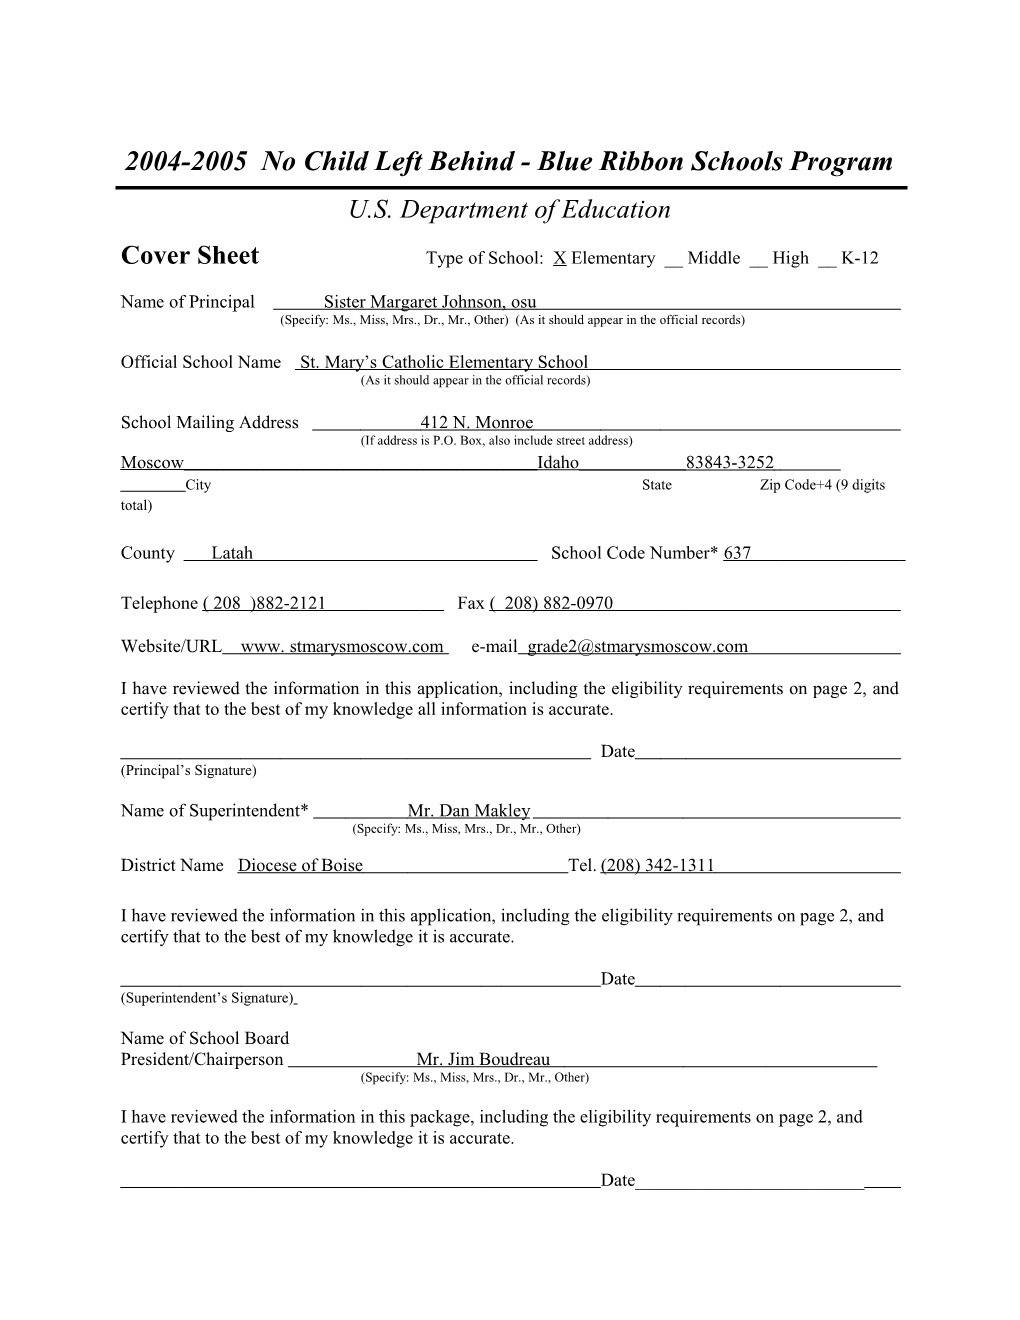 Application: 2004-2005, No Child Left Behind - Blue Ribbon Schools Program (Msword)